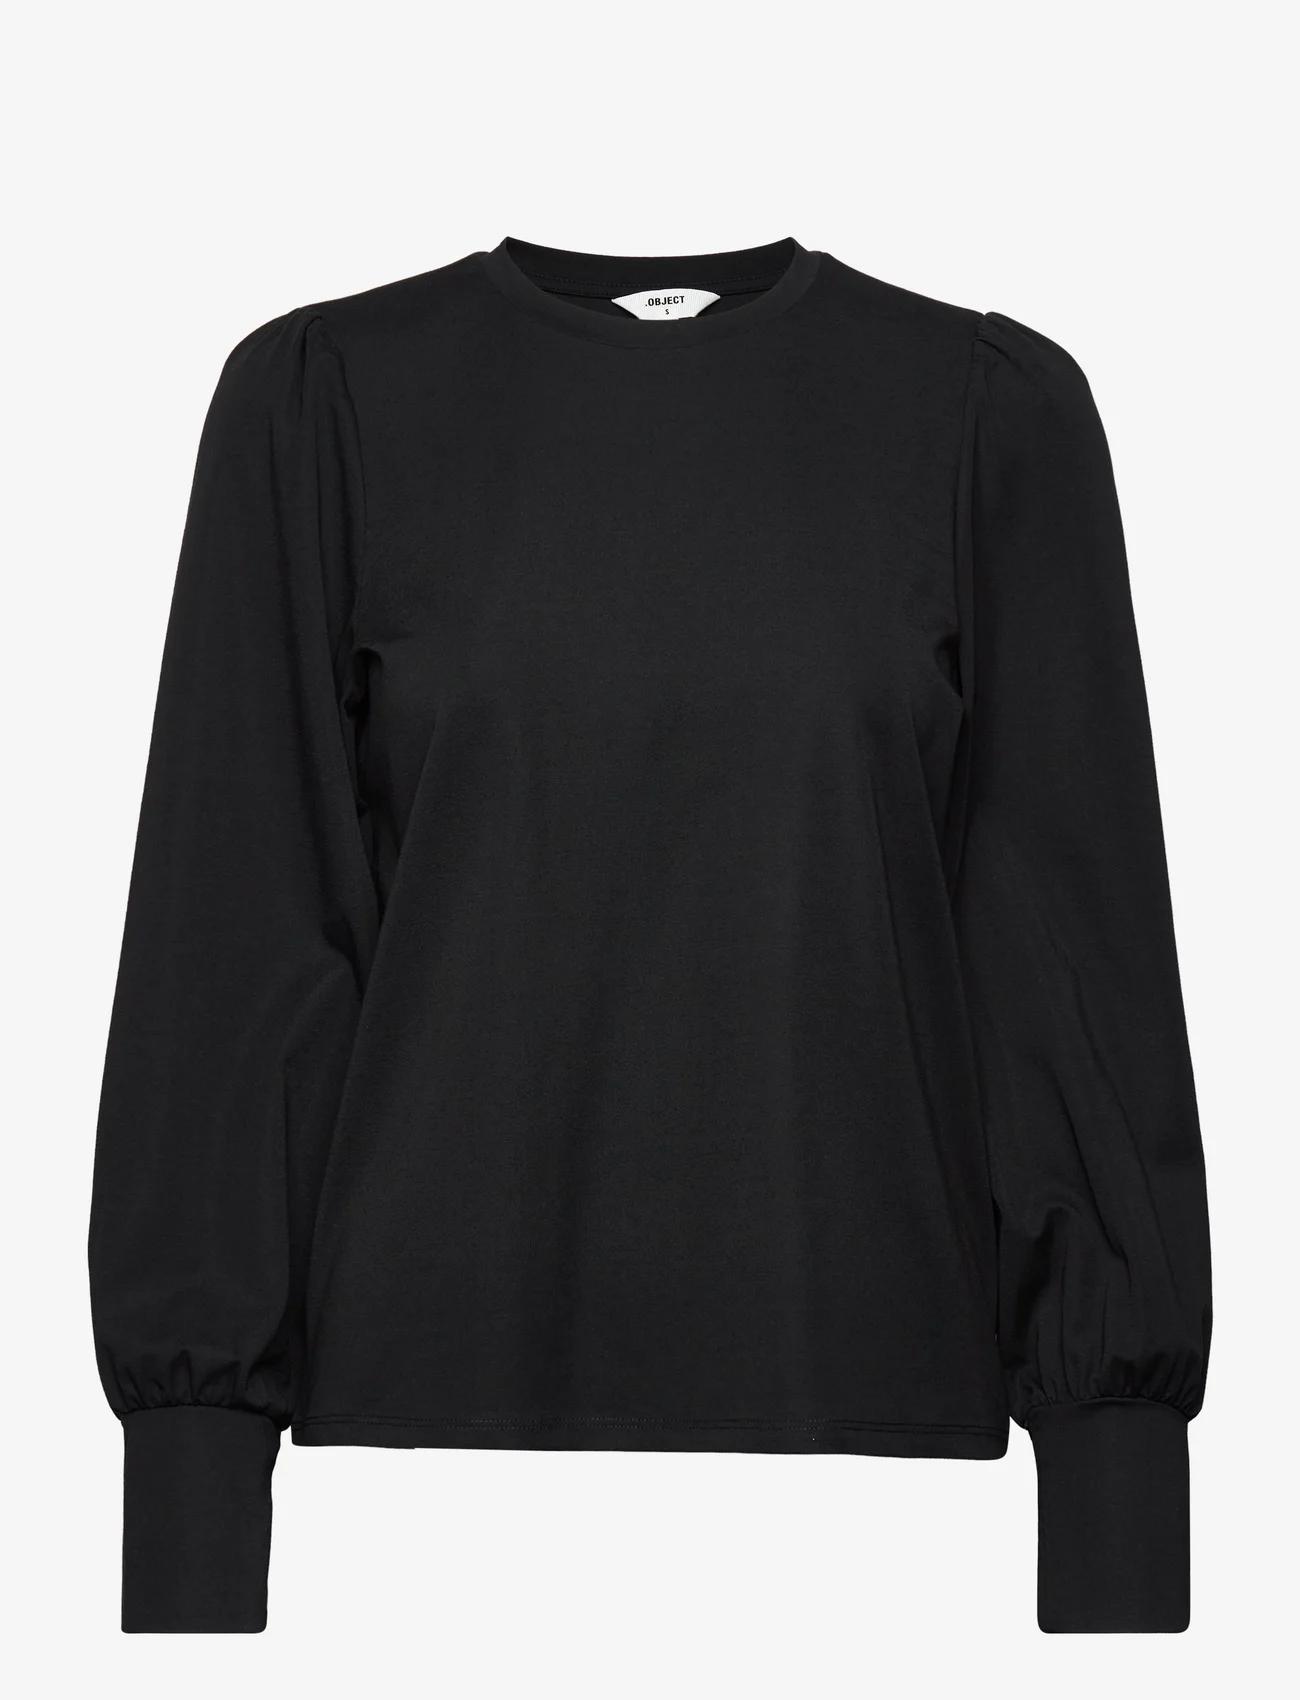 Object - OBJCAROLINE L/S TOP NOOS - long-sleeved blouses - black - 0